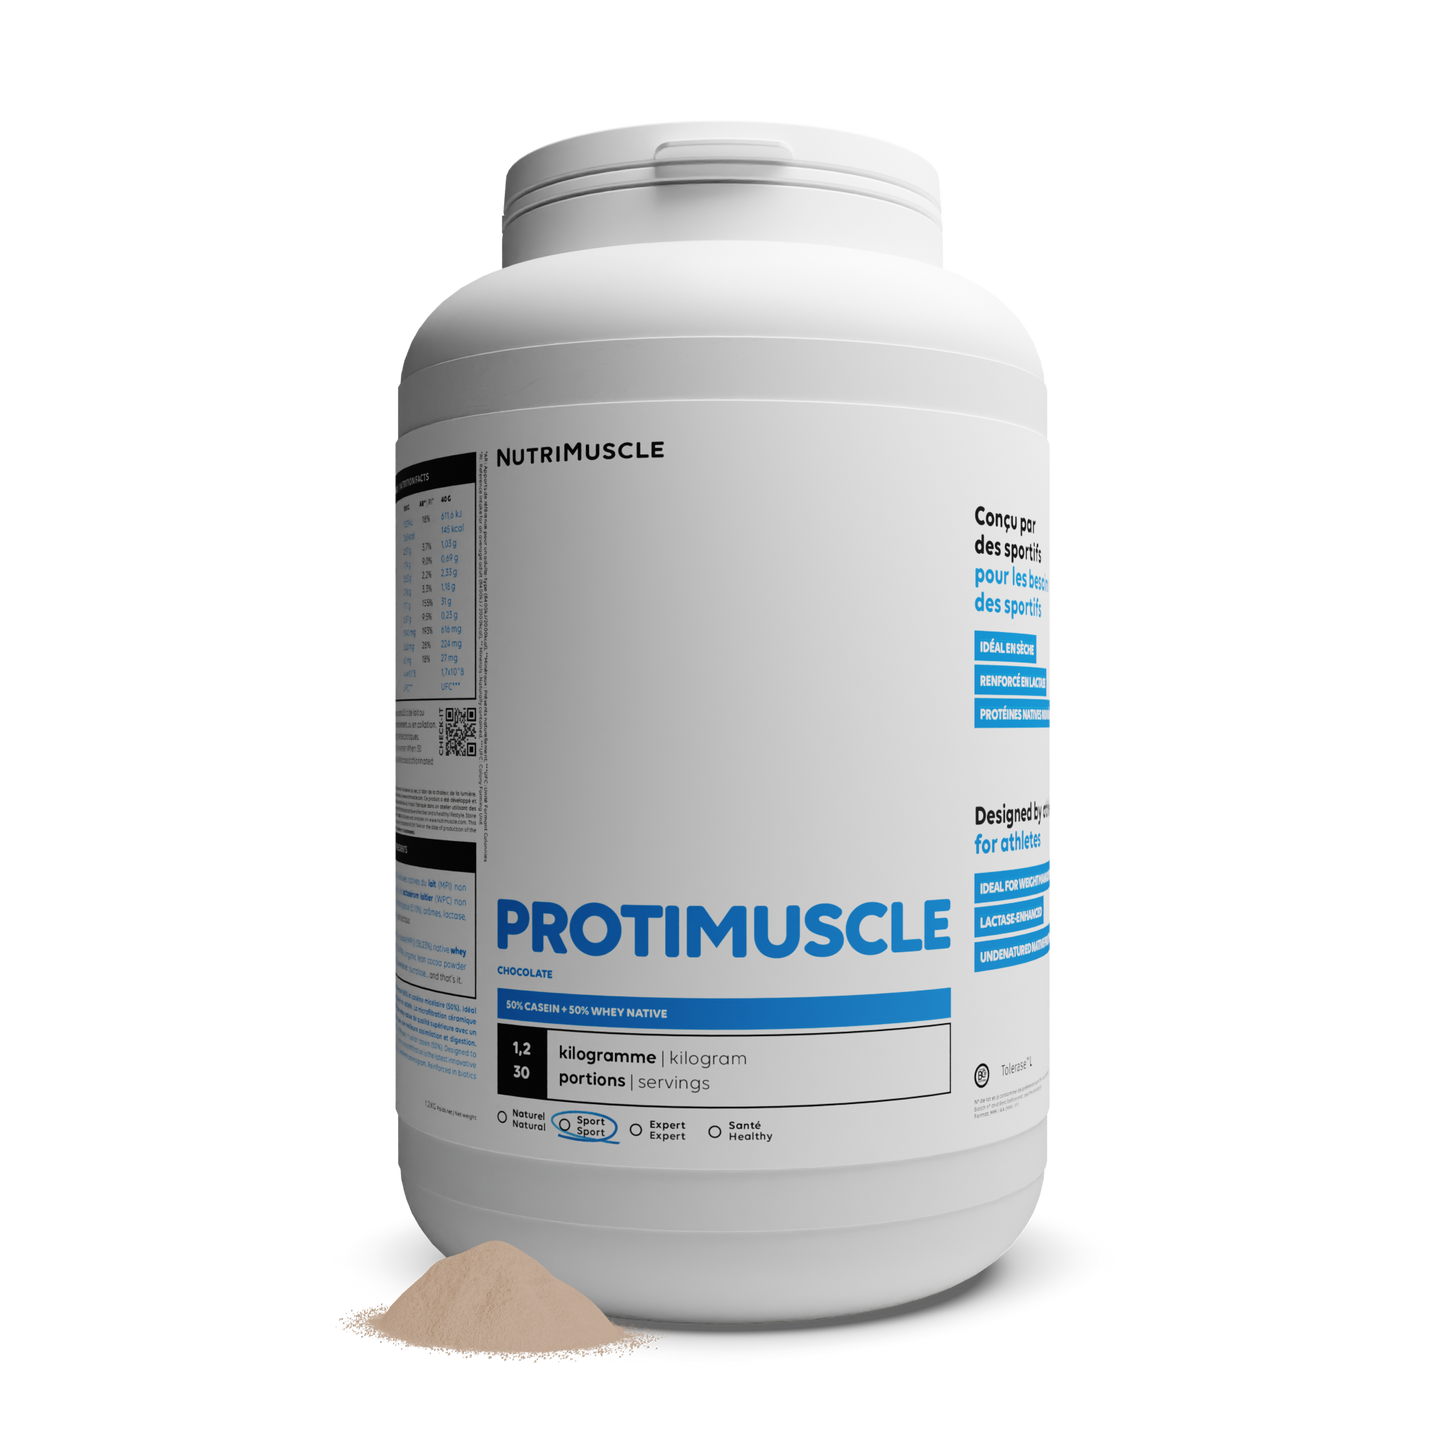 Protimuscle - Mescola la proteina